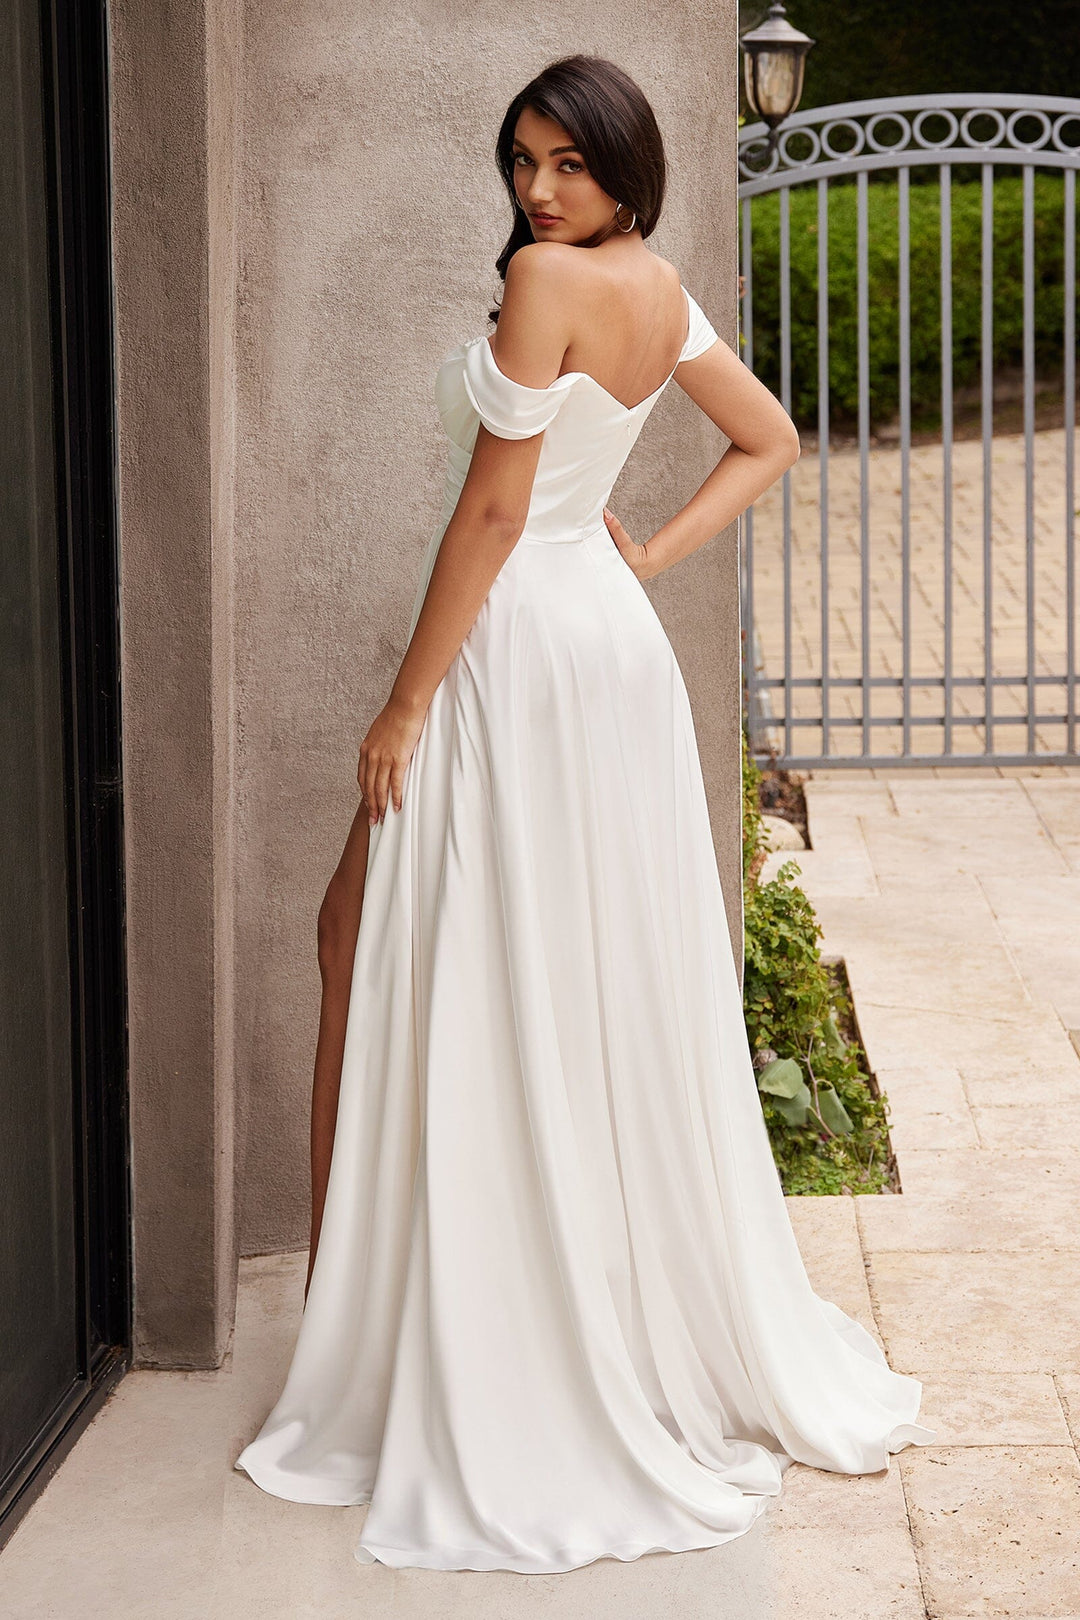 White Long Off Shoulder Satin Dress by Ladivine 7493W - Outlet